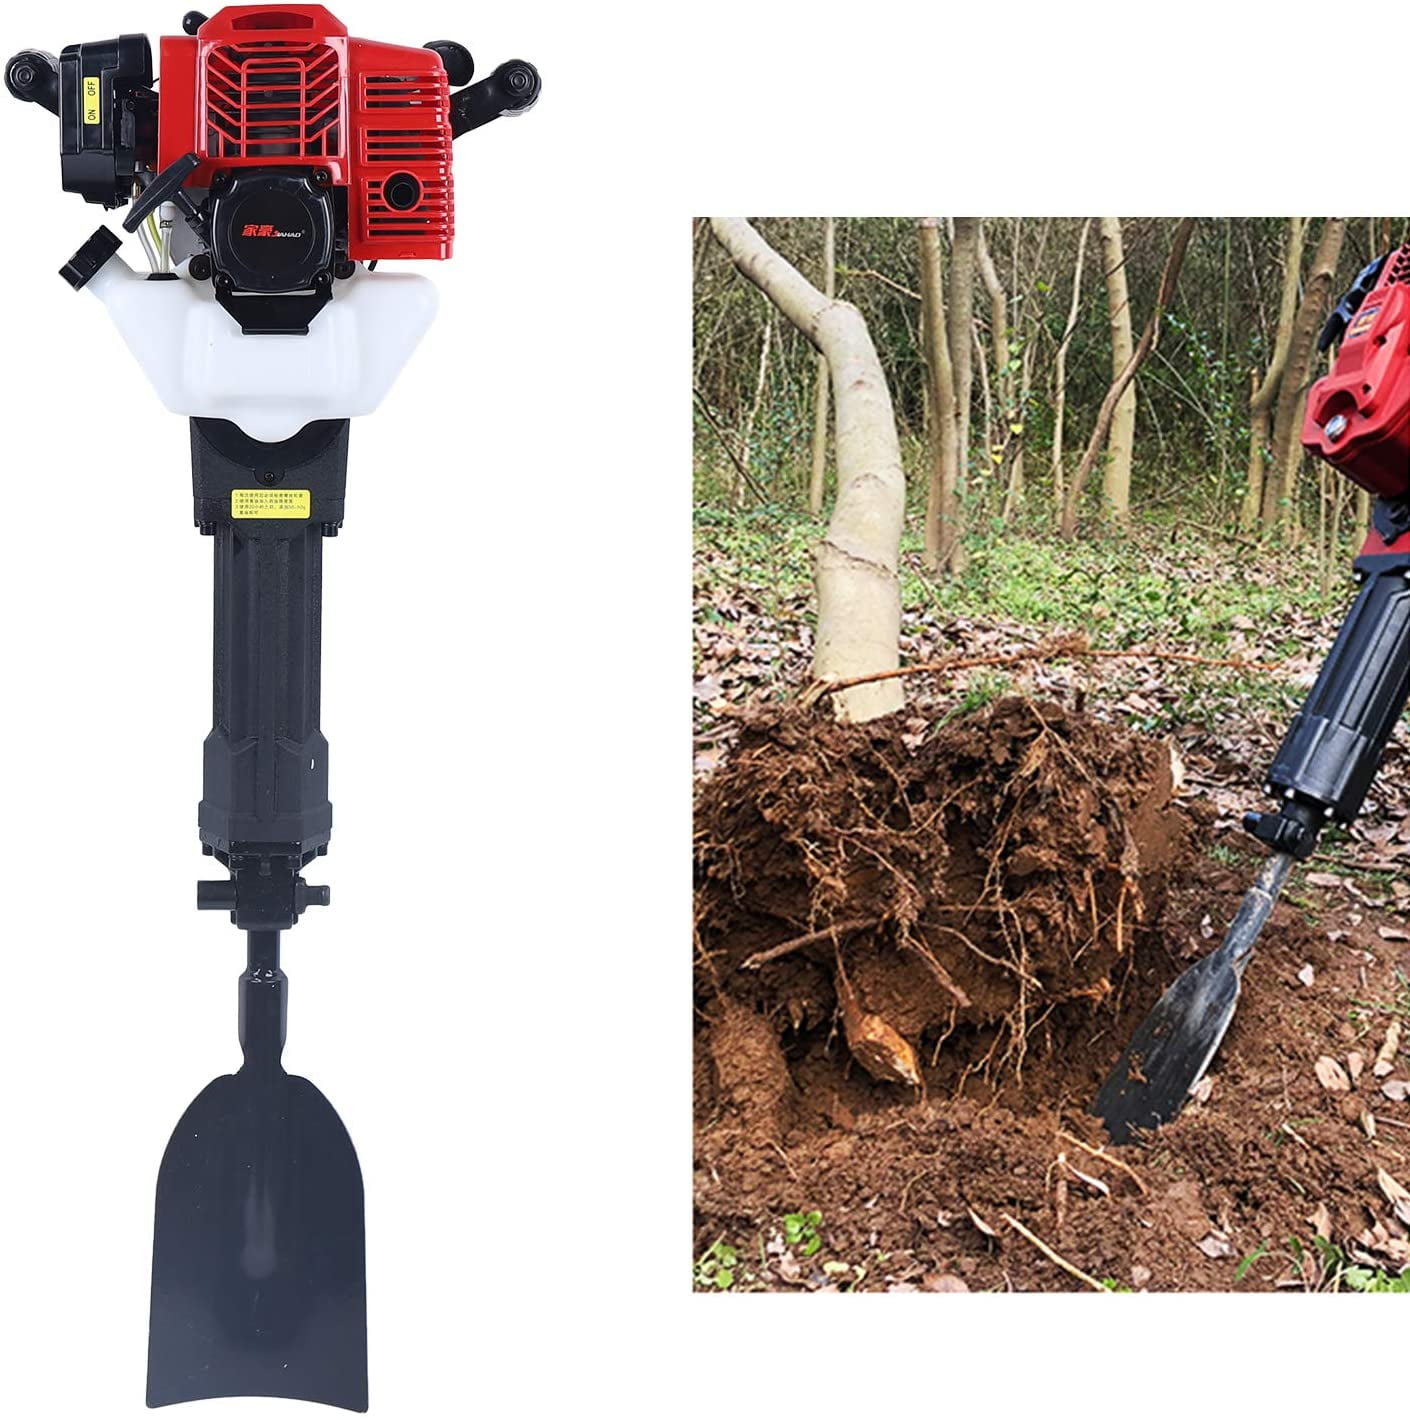 OUKANING Planting Shovel Drilling Machine 52cc 2-Stroke Garden Tree Digger Single Cylinder Portable Excavator Garden Tree Digger Post Hole Digger for Garden Farm Home 